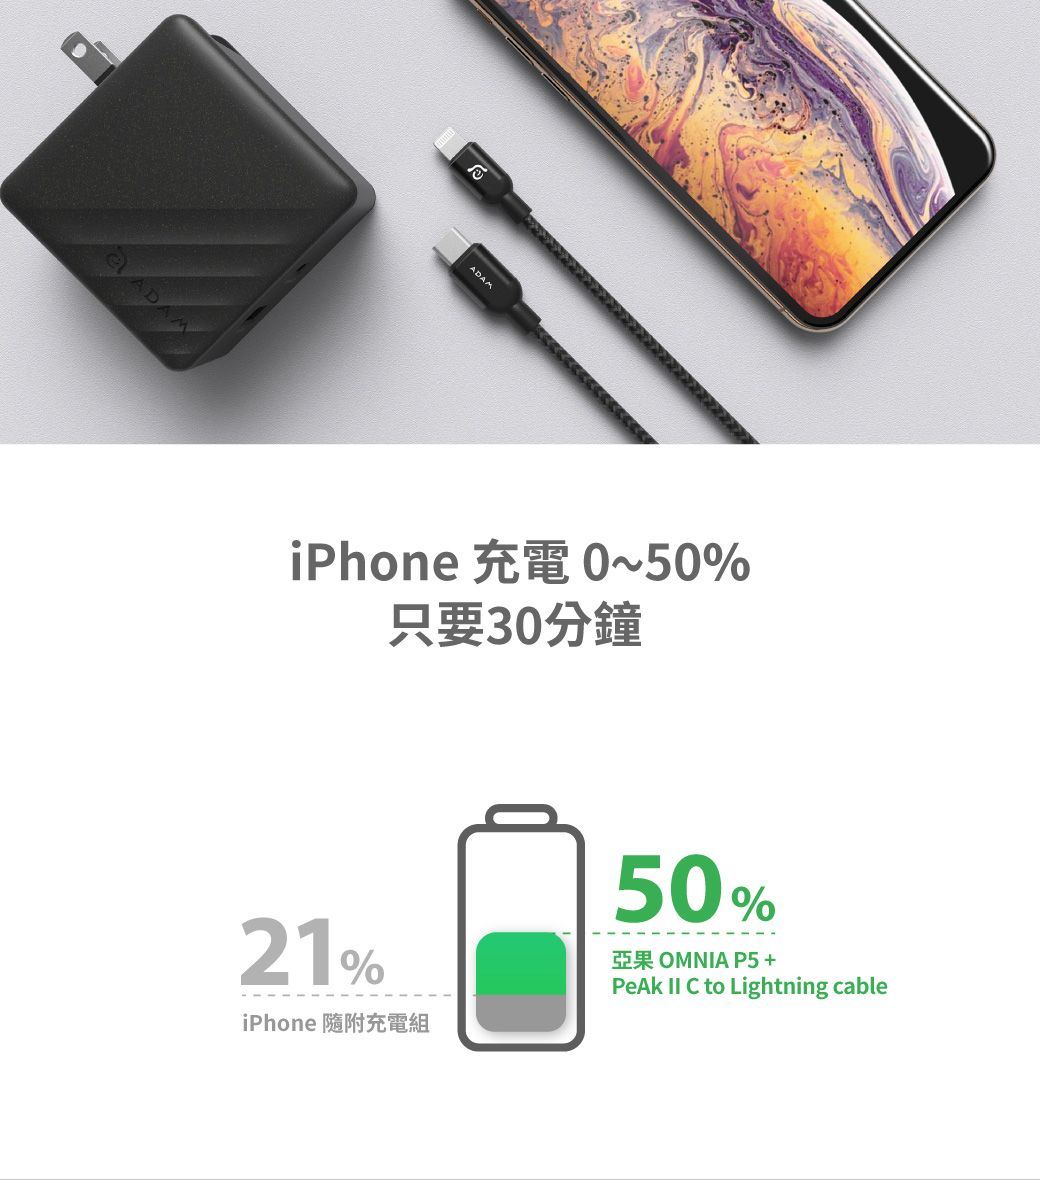 ADAADAMiPhone 充電 0~50%只要30分鐘21%iPhone 隨附充電組50%亞果 OMNIA P5 +  C to Lightning cable